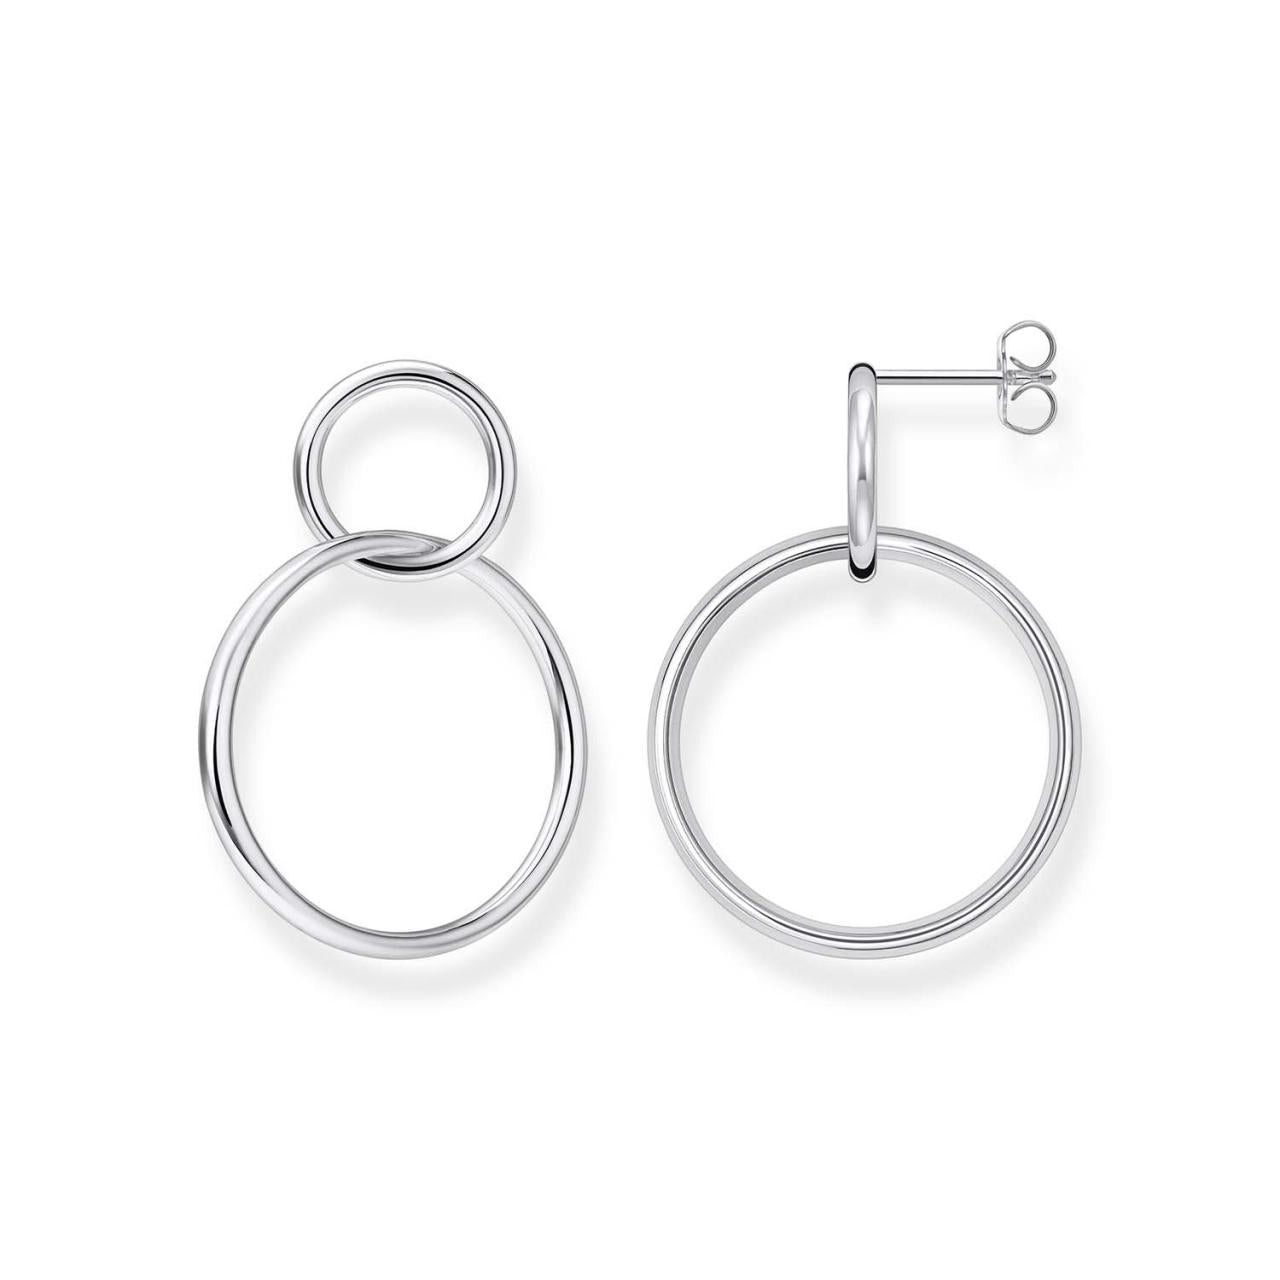 Interwined circles earrings